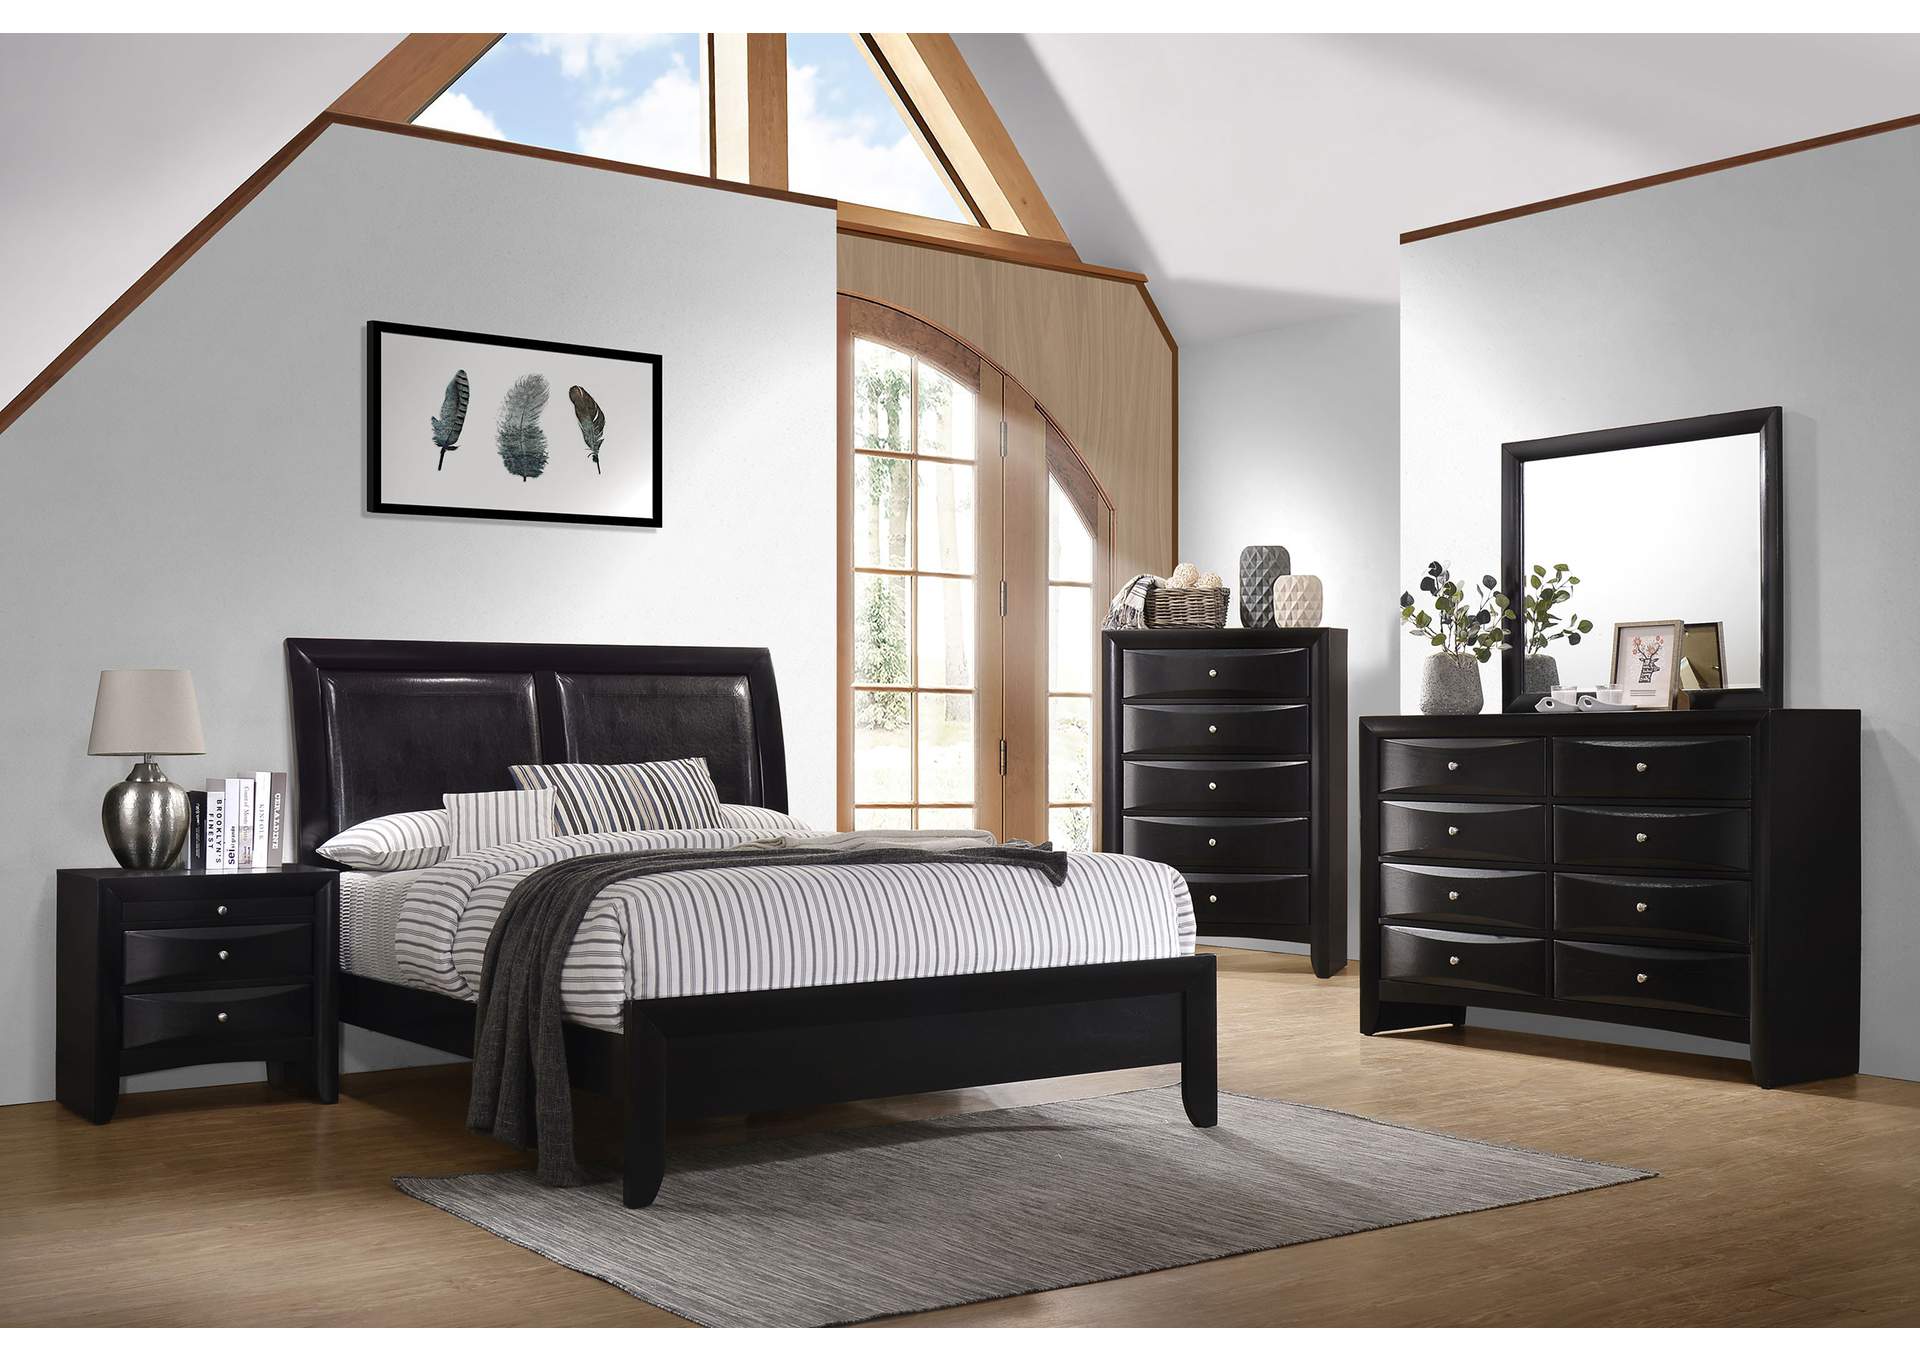 Briana California King Upholstered Panel Bed Black,Coaster Furniture